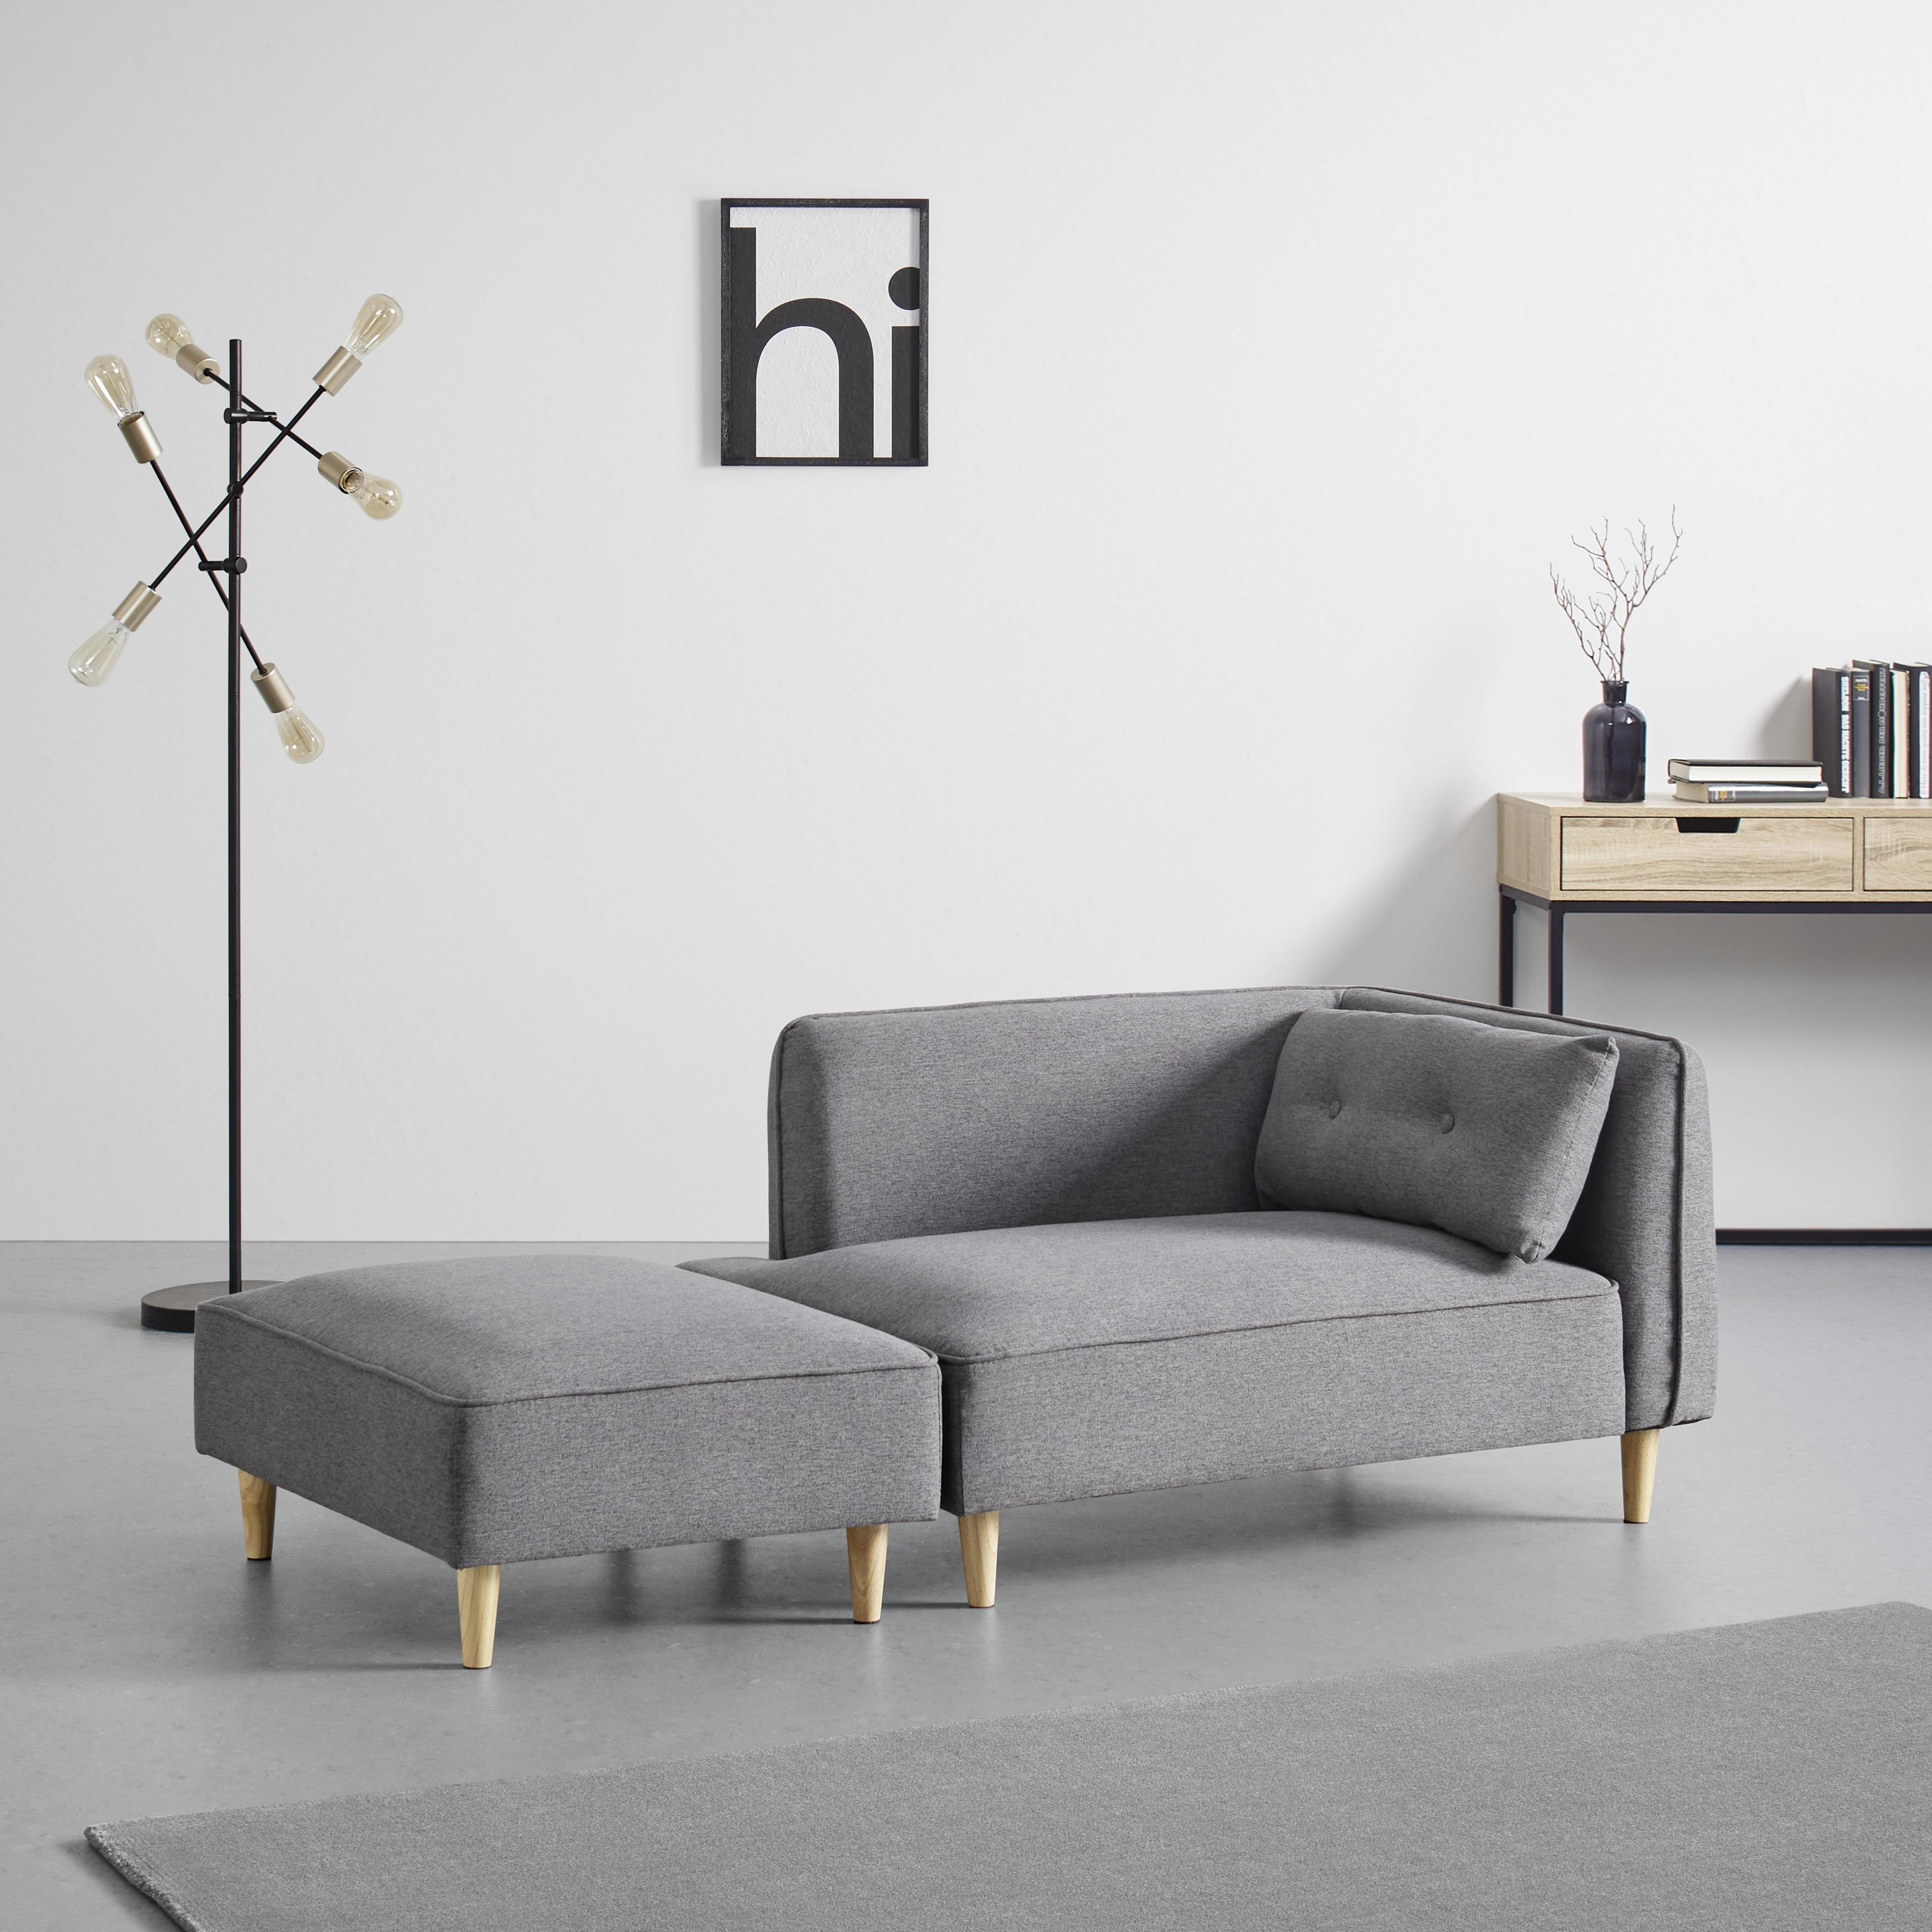 Modulares Sofa "Fanny" mit Hocker, dunkelgrau - Dunkelgrau/Naturfarben, MODERN, Holz/Textil (154/55/73cm) - Bessagi Home